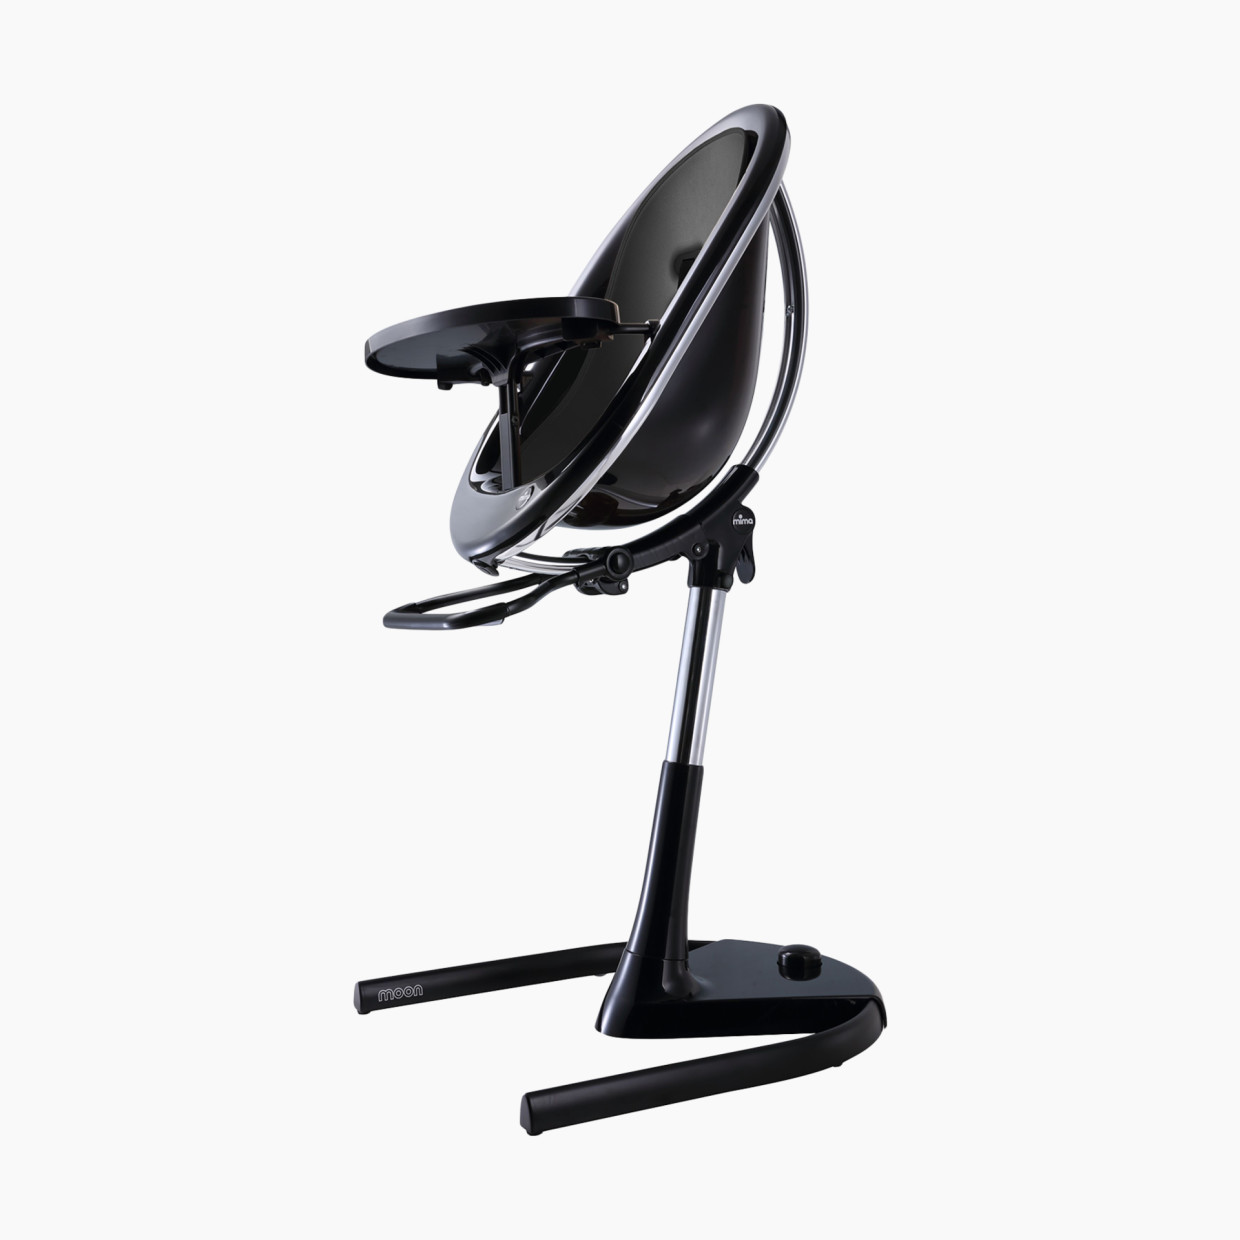 Mima Moon 2G High Chair with Black Frame - Black.